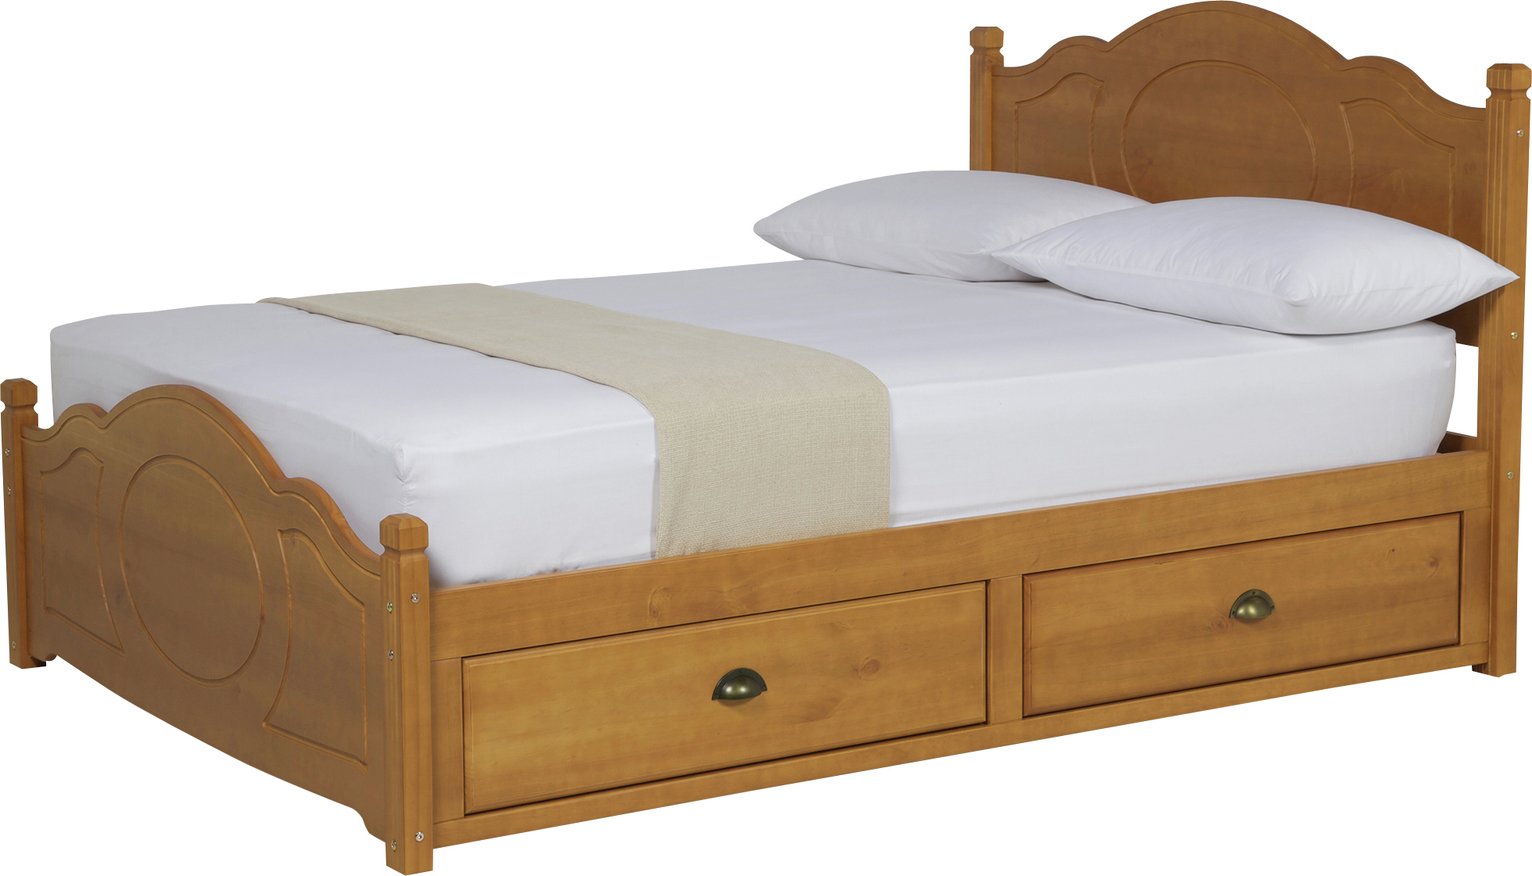 Argos Home Sherington Kingsize 4 Drawer Bed Frame review